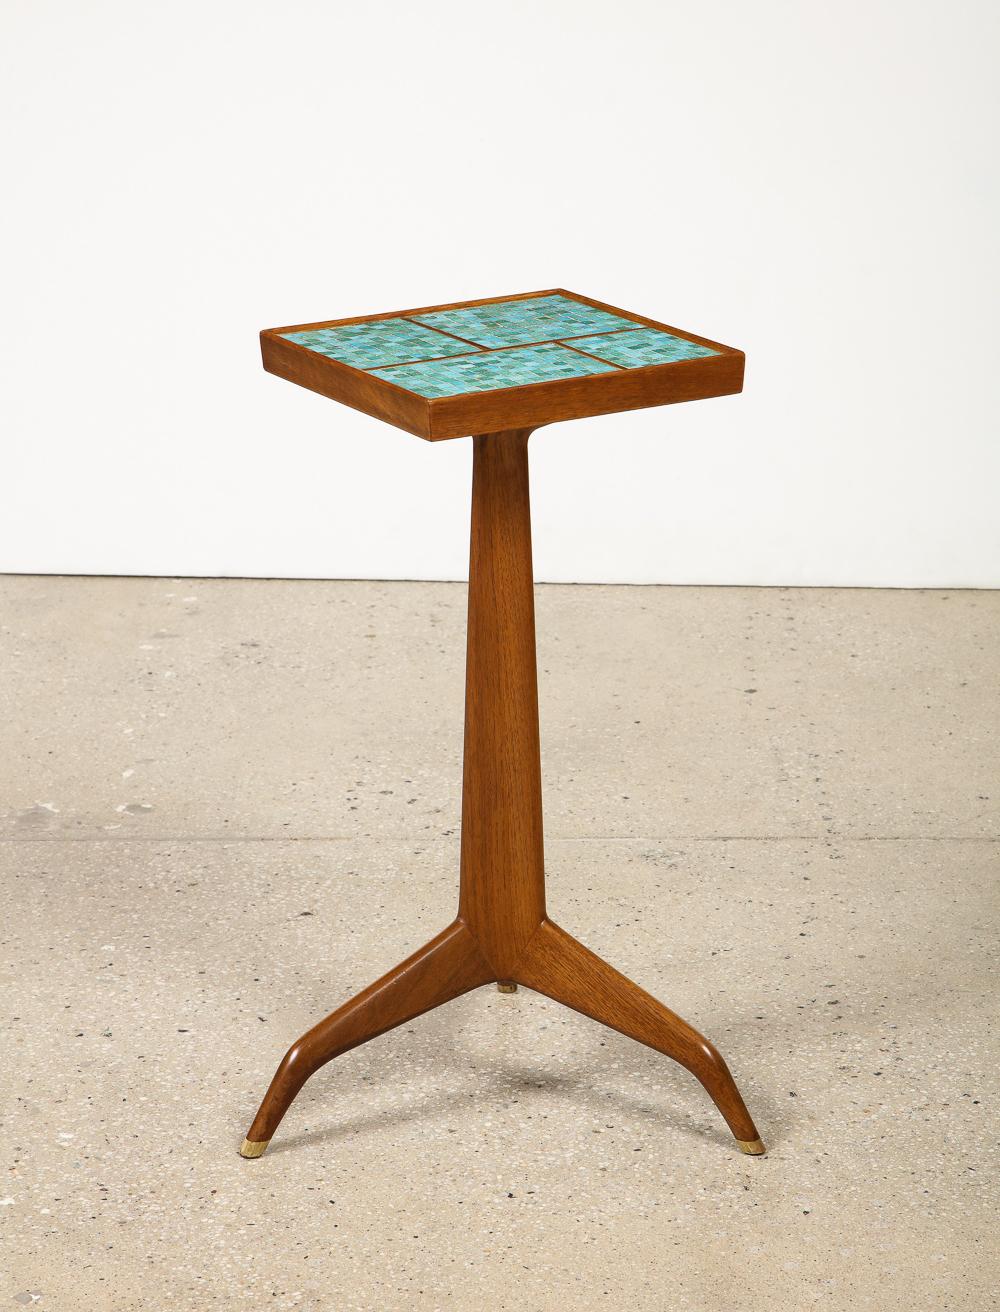 Mid-20th Century Rare Side Table #5633 by Edward Wormley for Dunbar